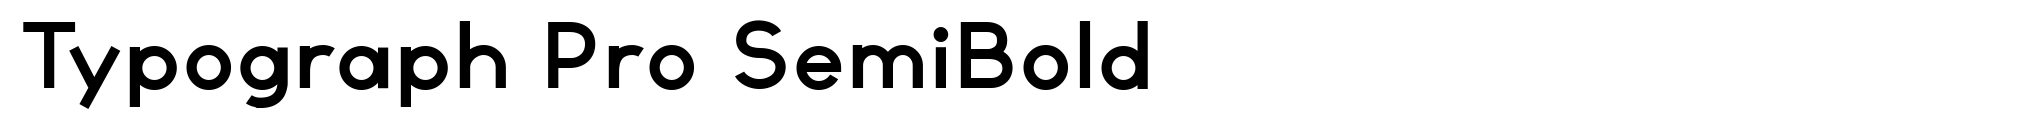 Typograph Pro SemiBold image